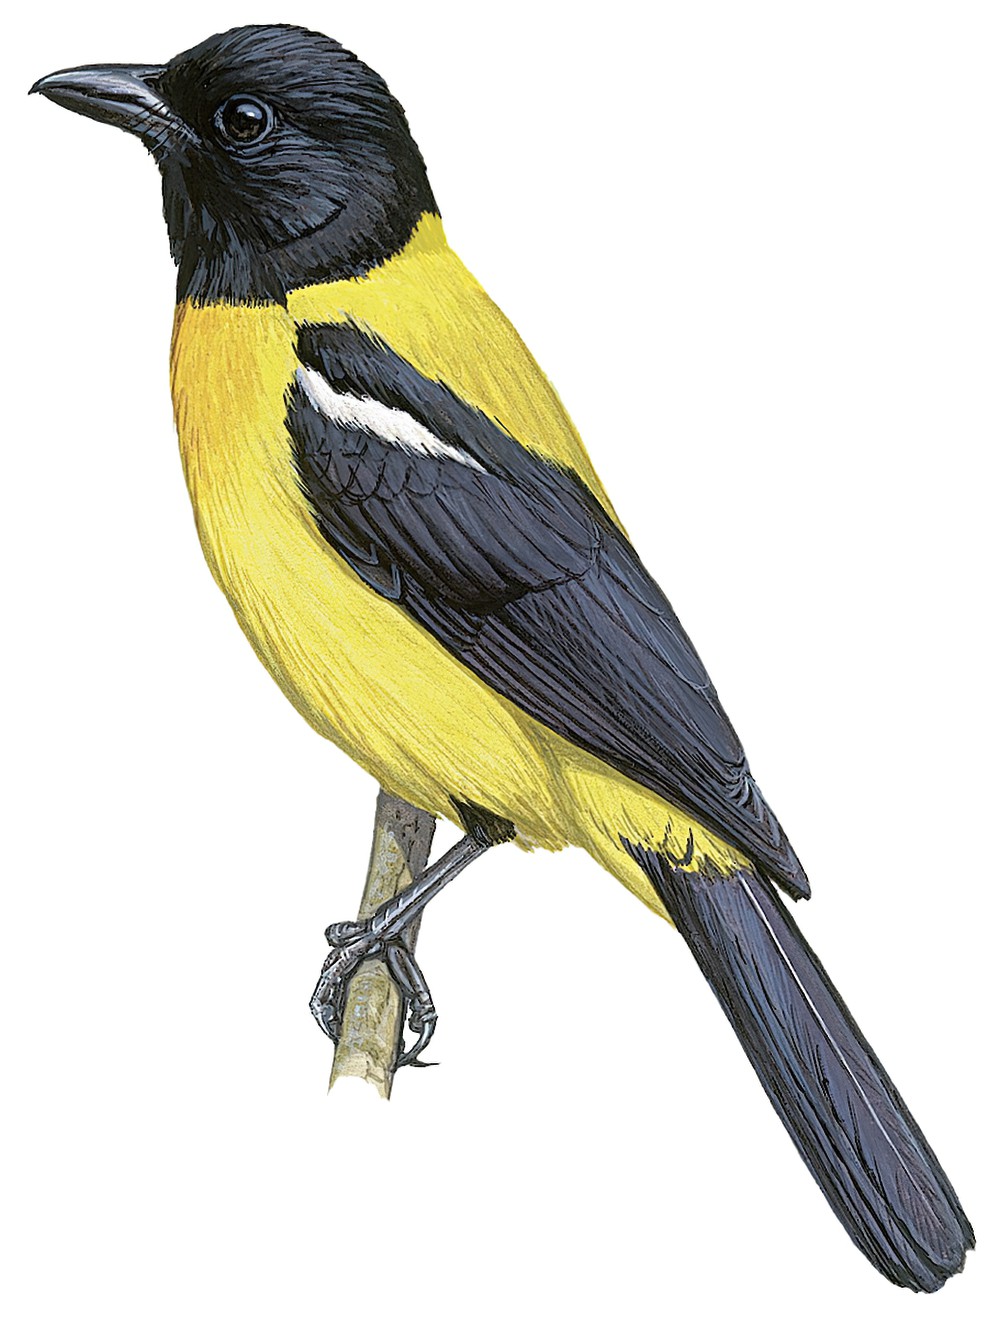 Black-throated Shrike-Tanager / Lanio aurantius